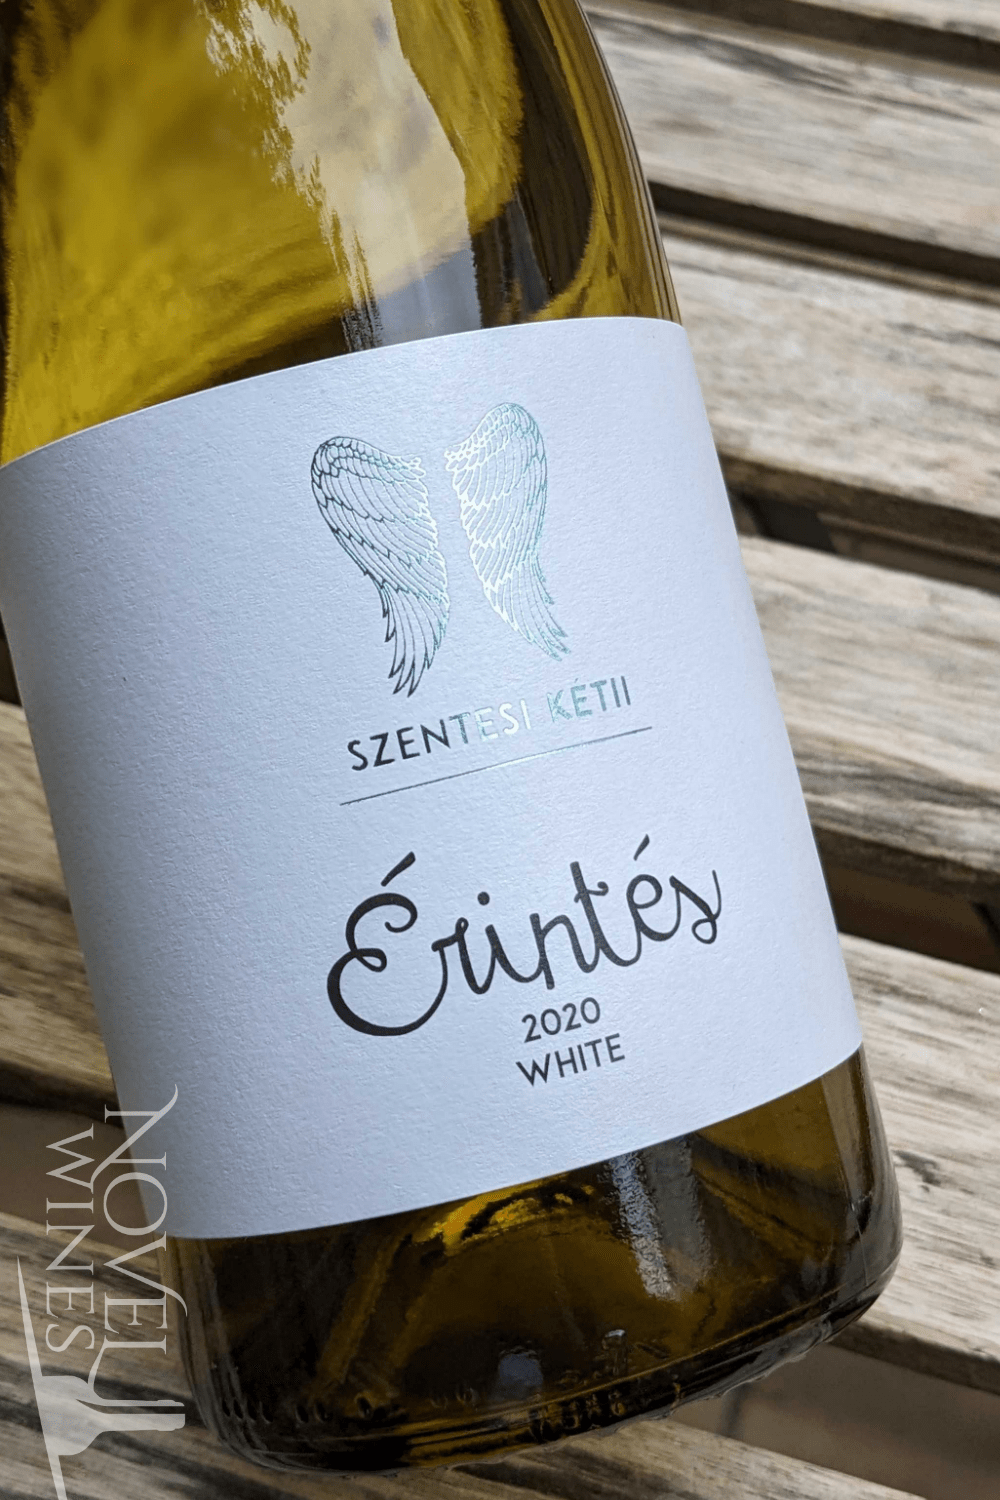 Szentesi Pince White Wine Szentesi Erintes White 2020, Hungary